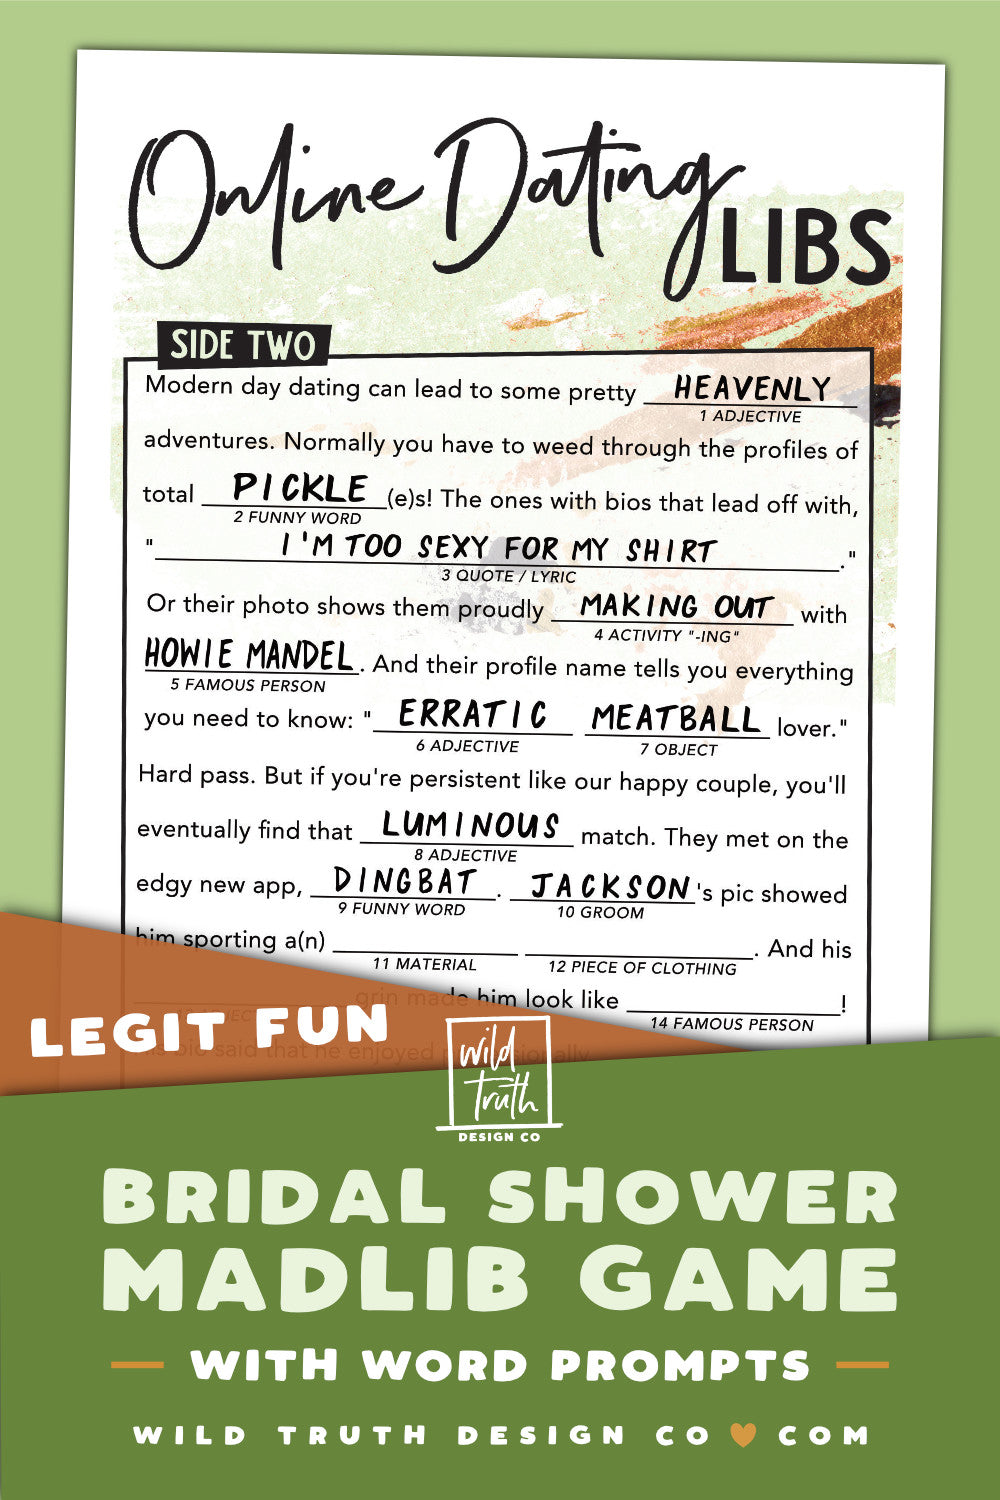 Fun Bridal Shower Mad Lib Game - Online Dating